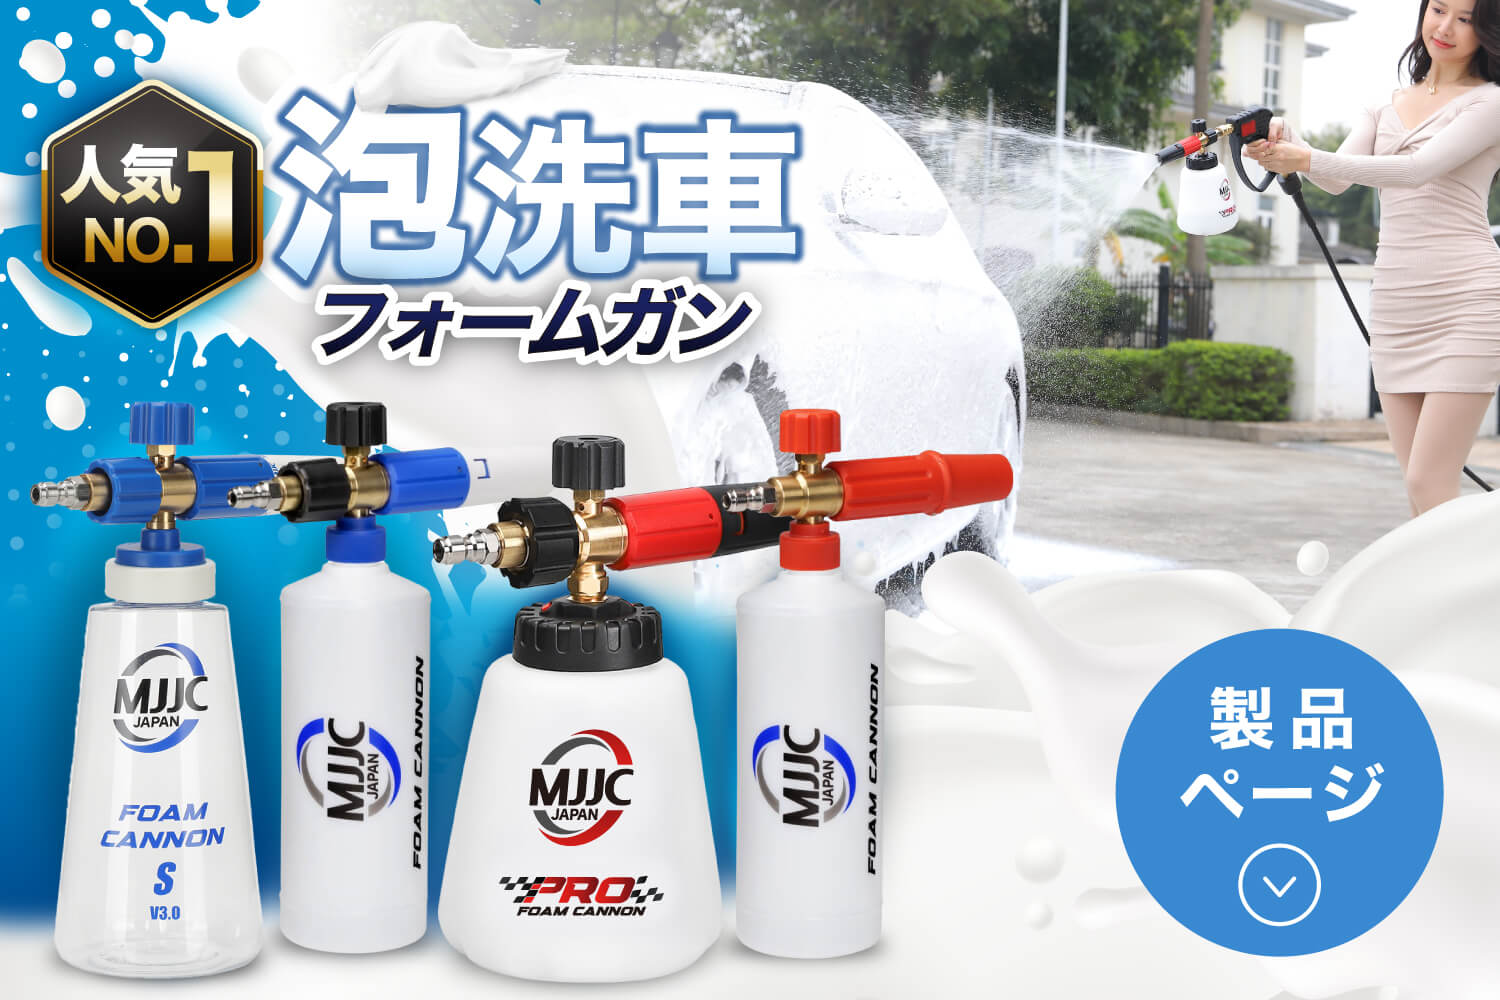 MJJC JAPAN | 泡洗車用フォームガン。ケルヒャーなど各社高圧洗浄機に